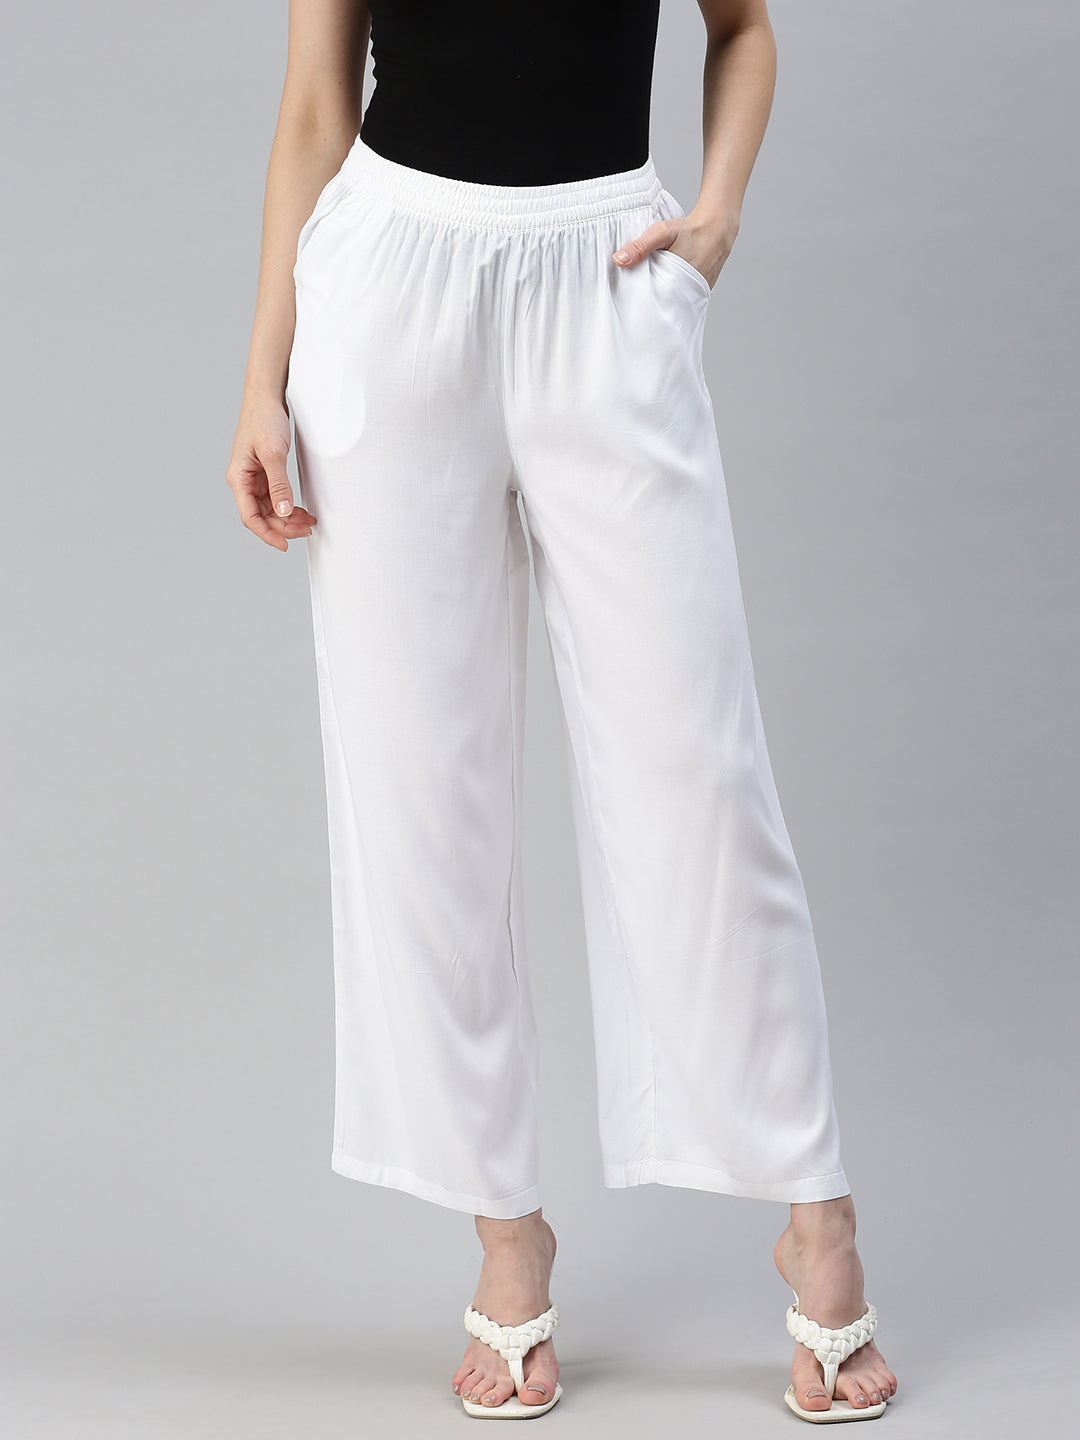 Shop Prisma's White Palazzo Pants for Women Online